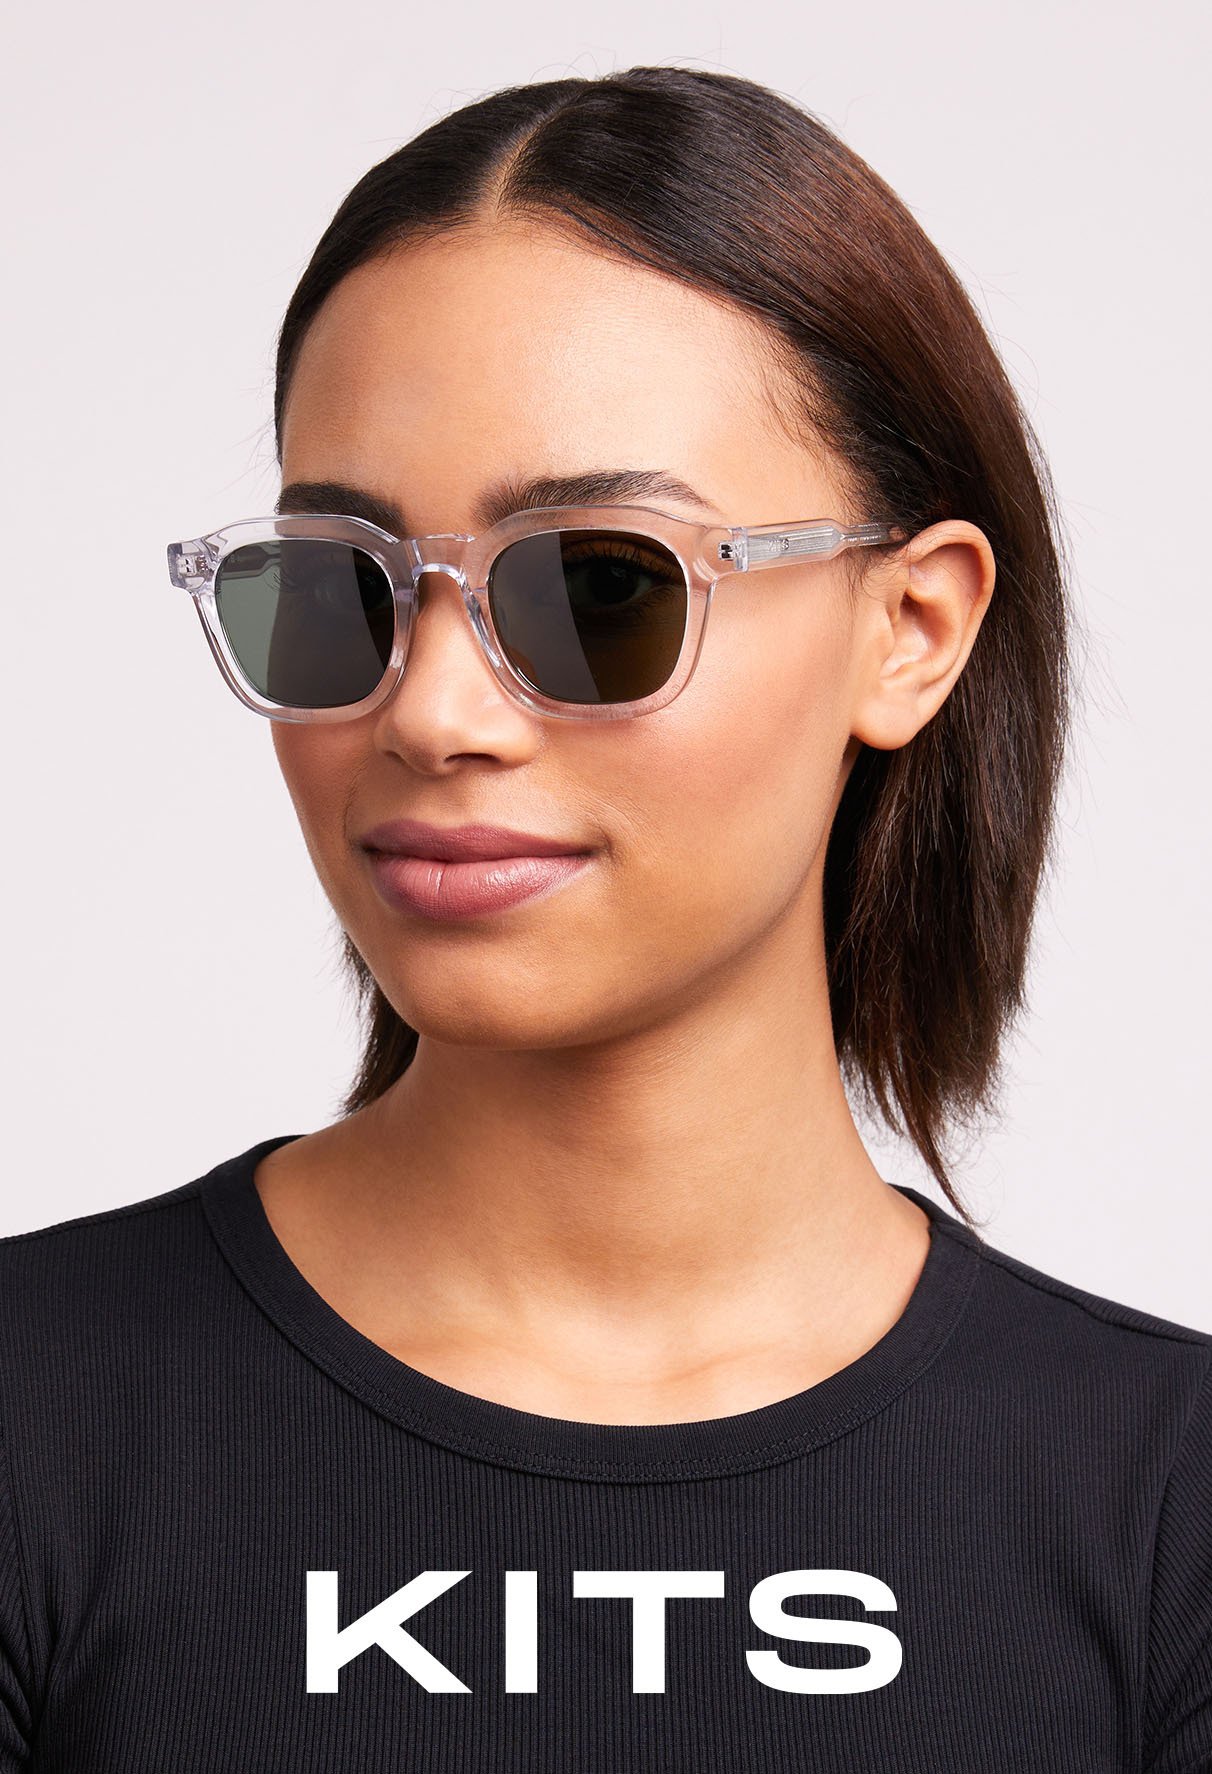 Kits Sunglasses Image